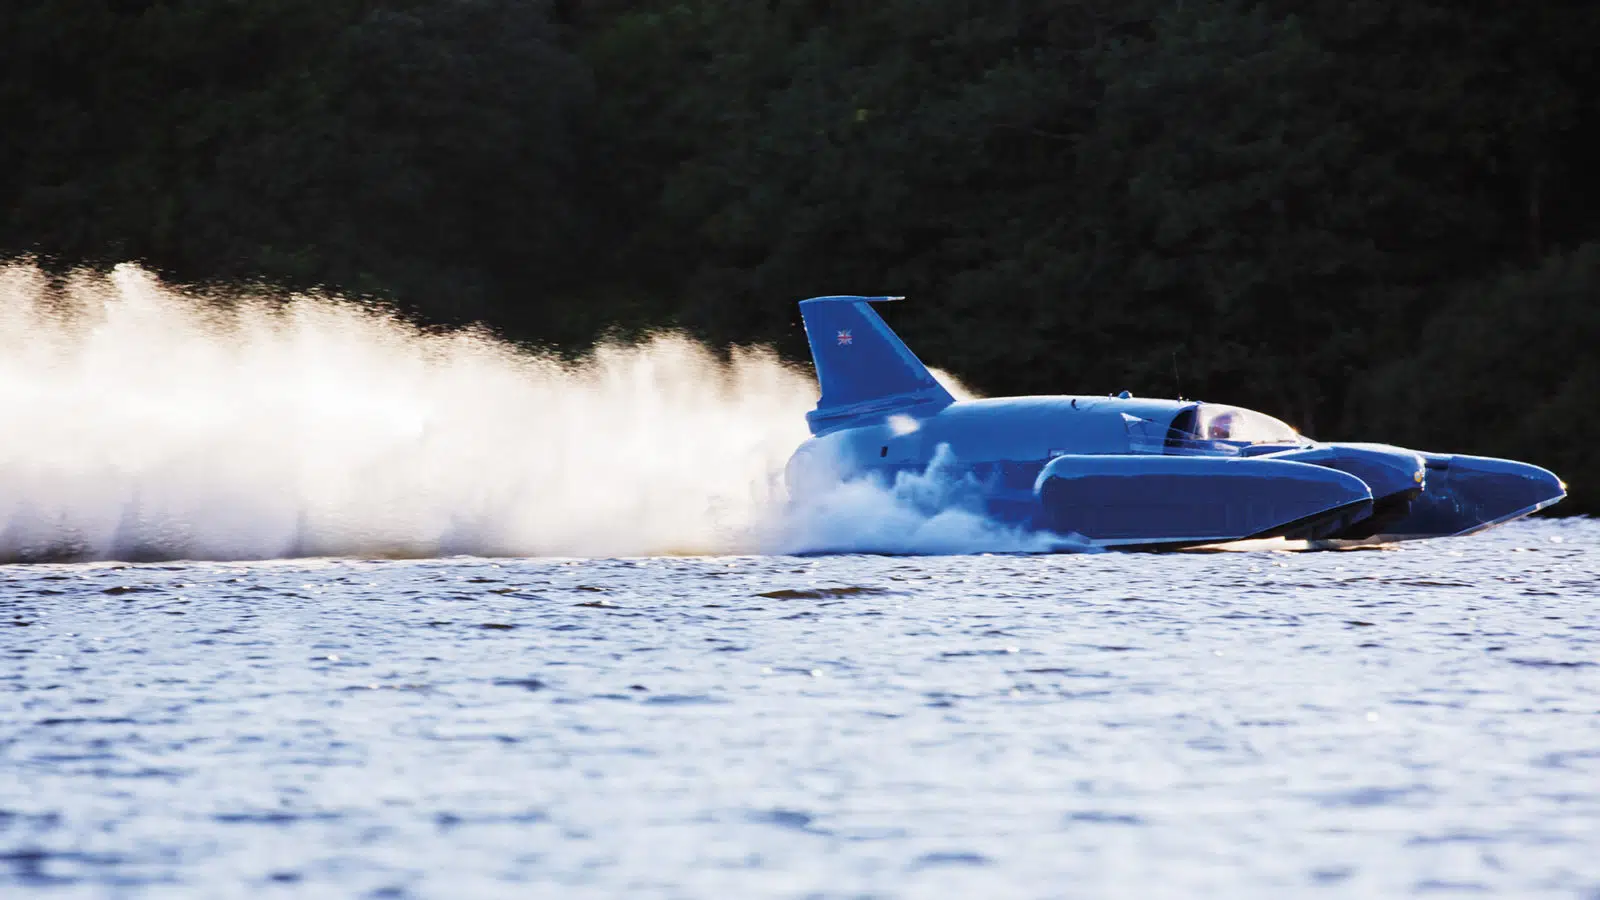 Image of the rebuilt Bluebird K7 on a lake